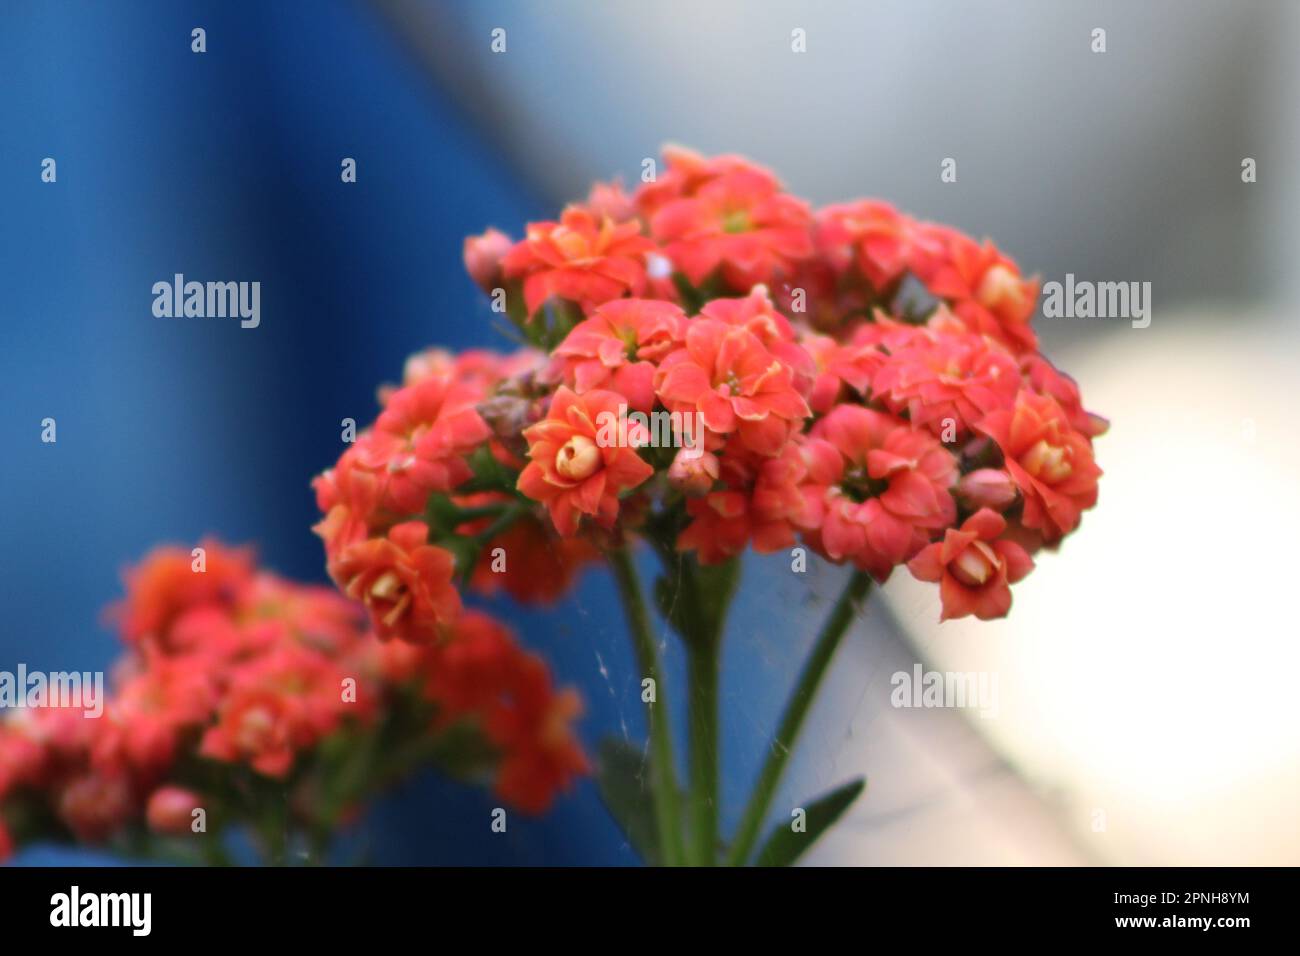 Blossom flaming katy (kalanchoe), selective focus on orange kalanchoe flower. Stock Photo